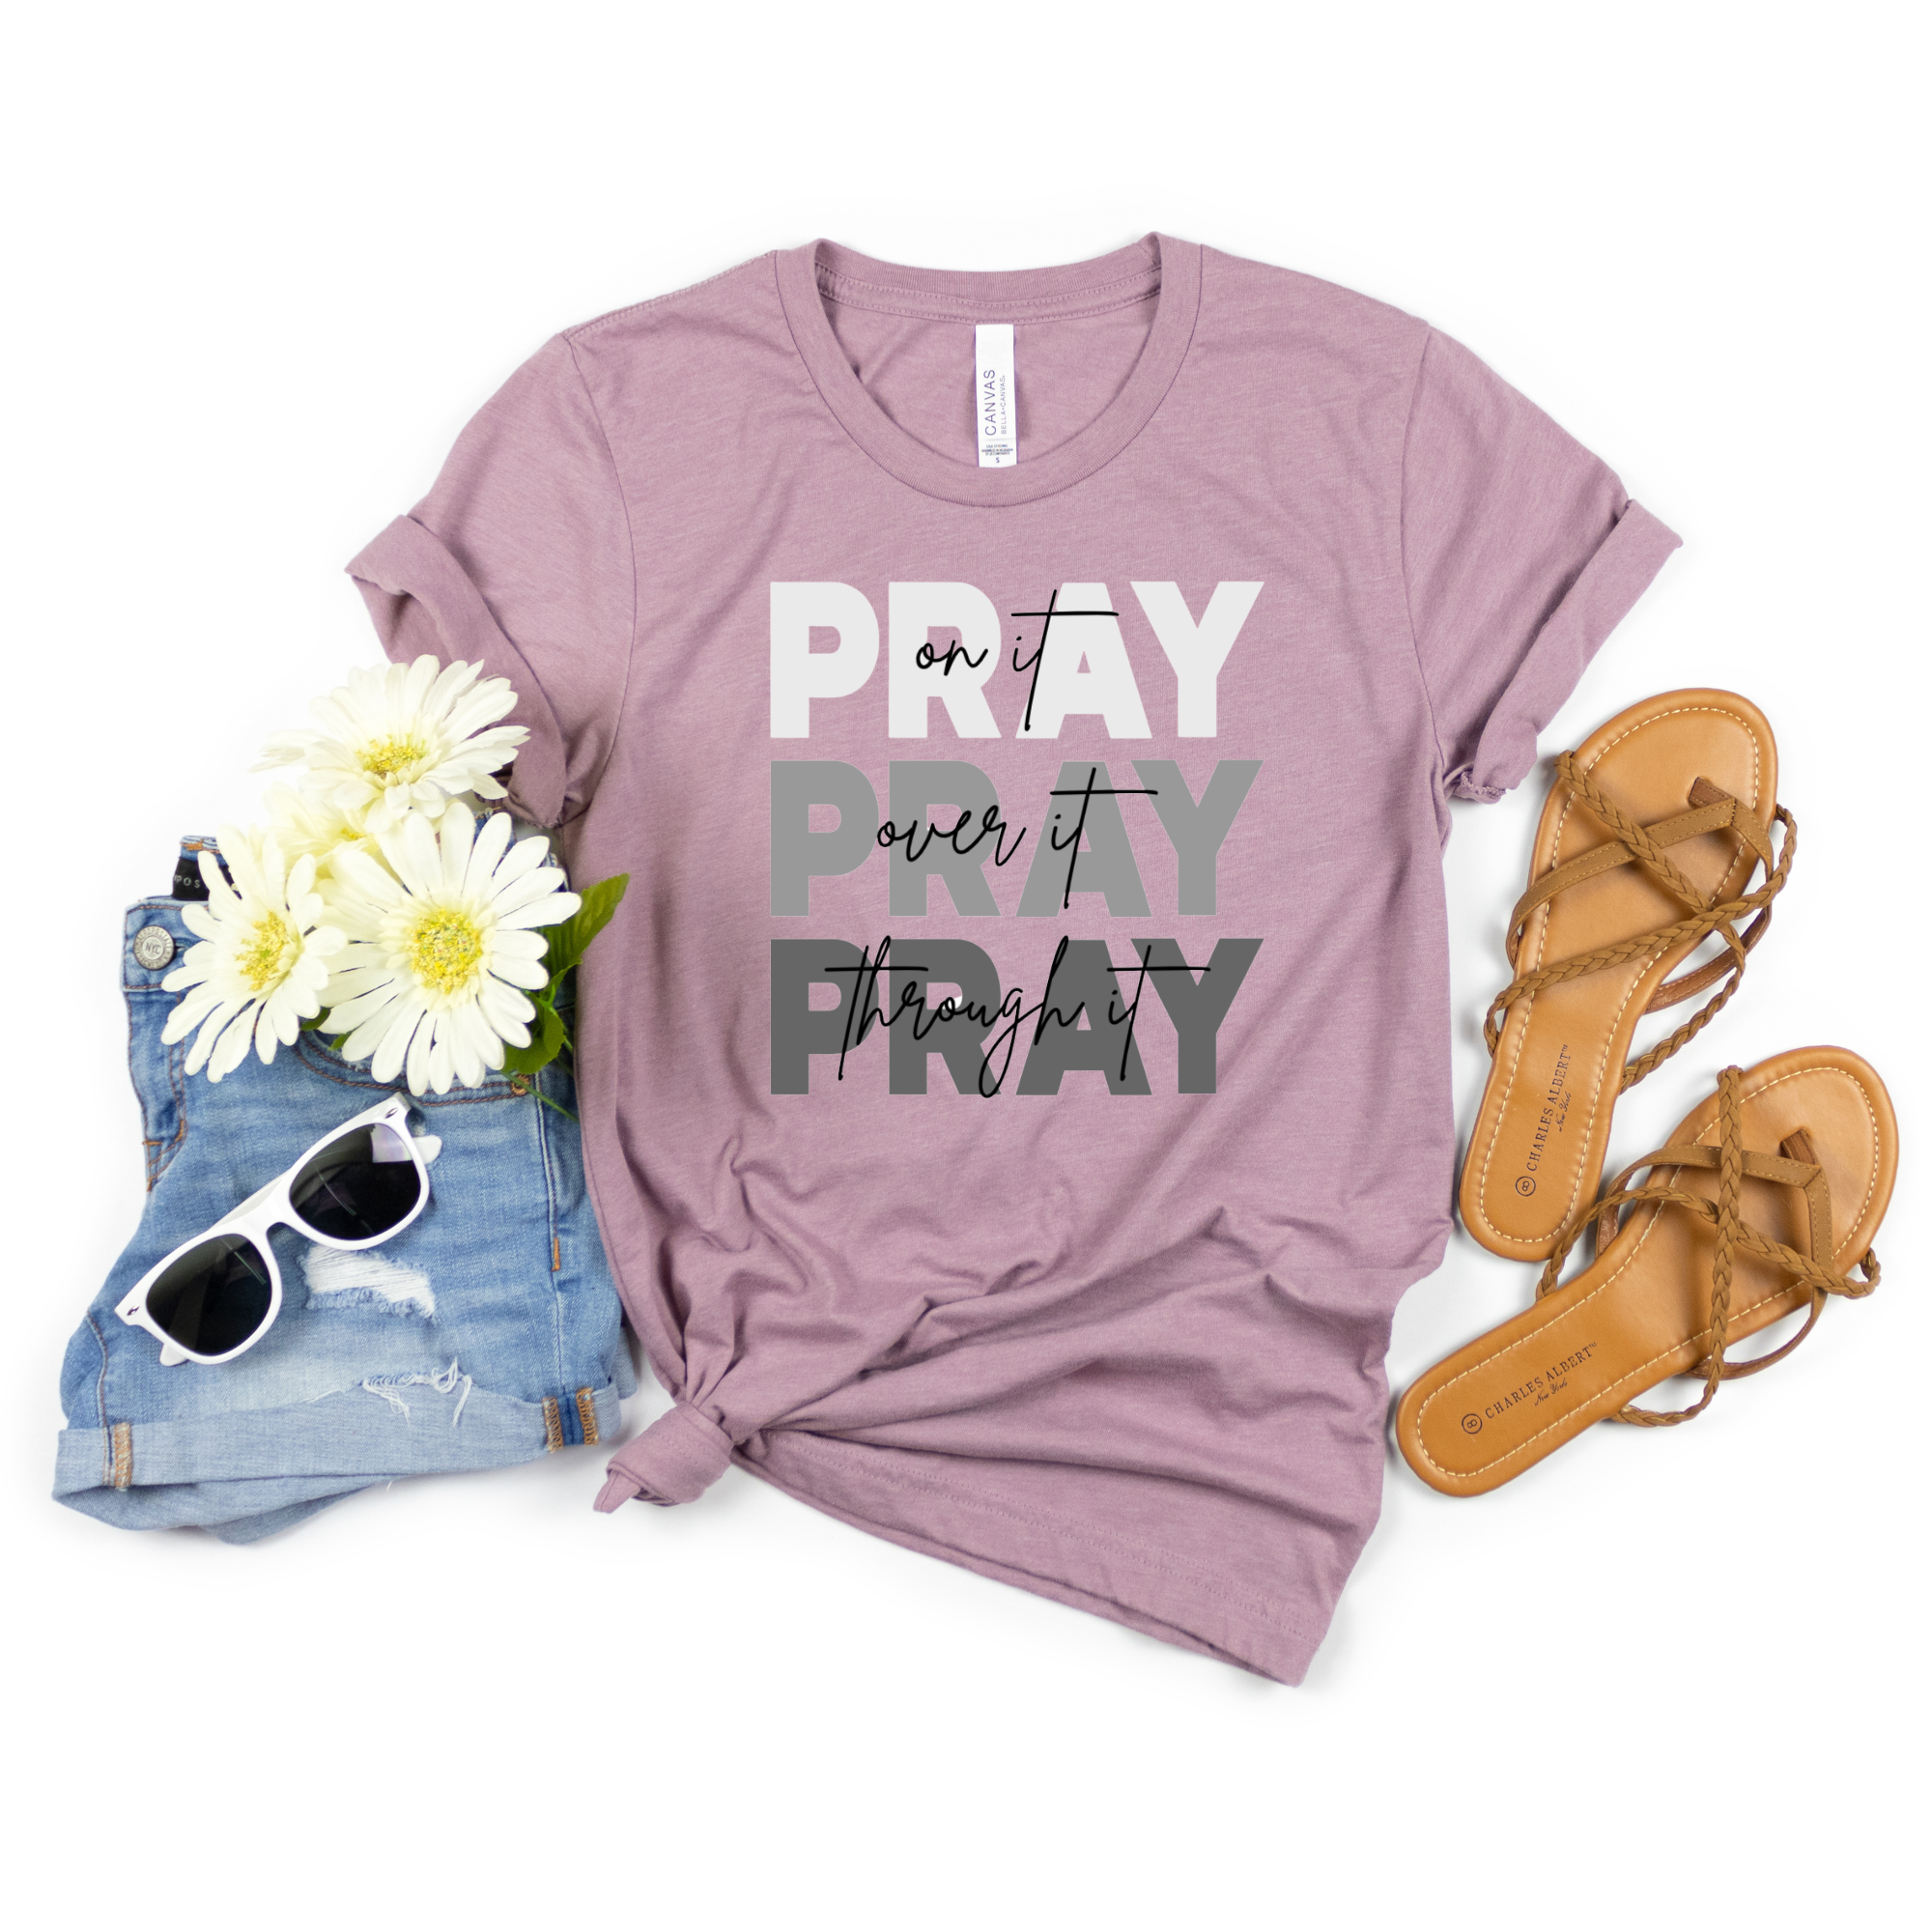 Pray on It Pray Over It Pray Through It Shirt